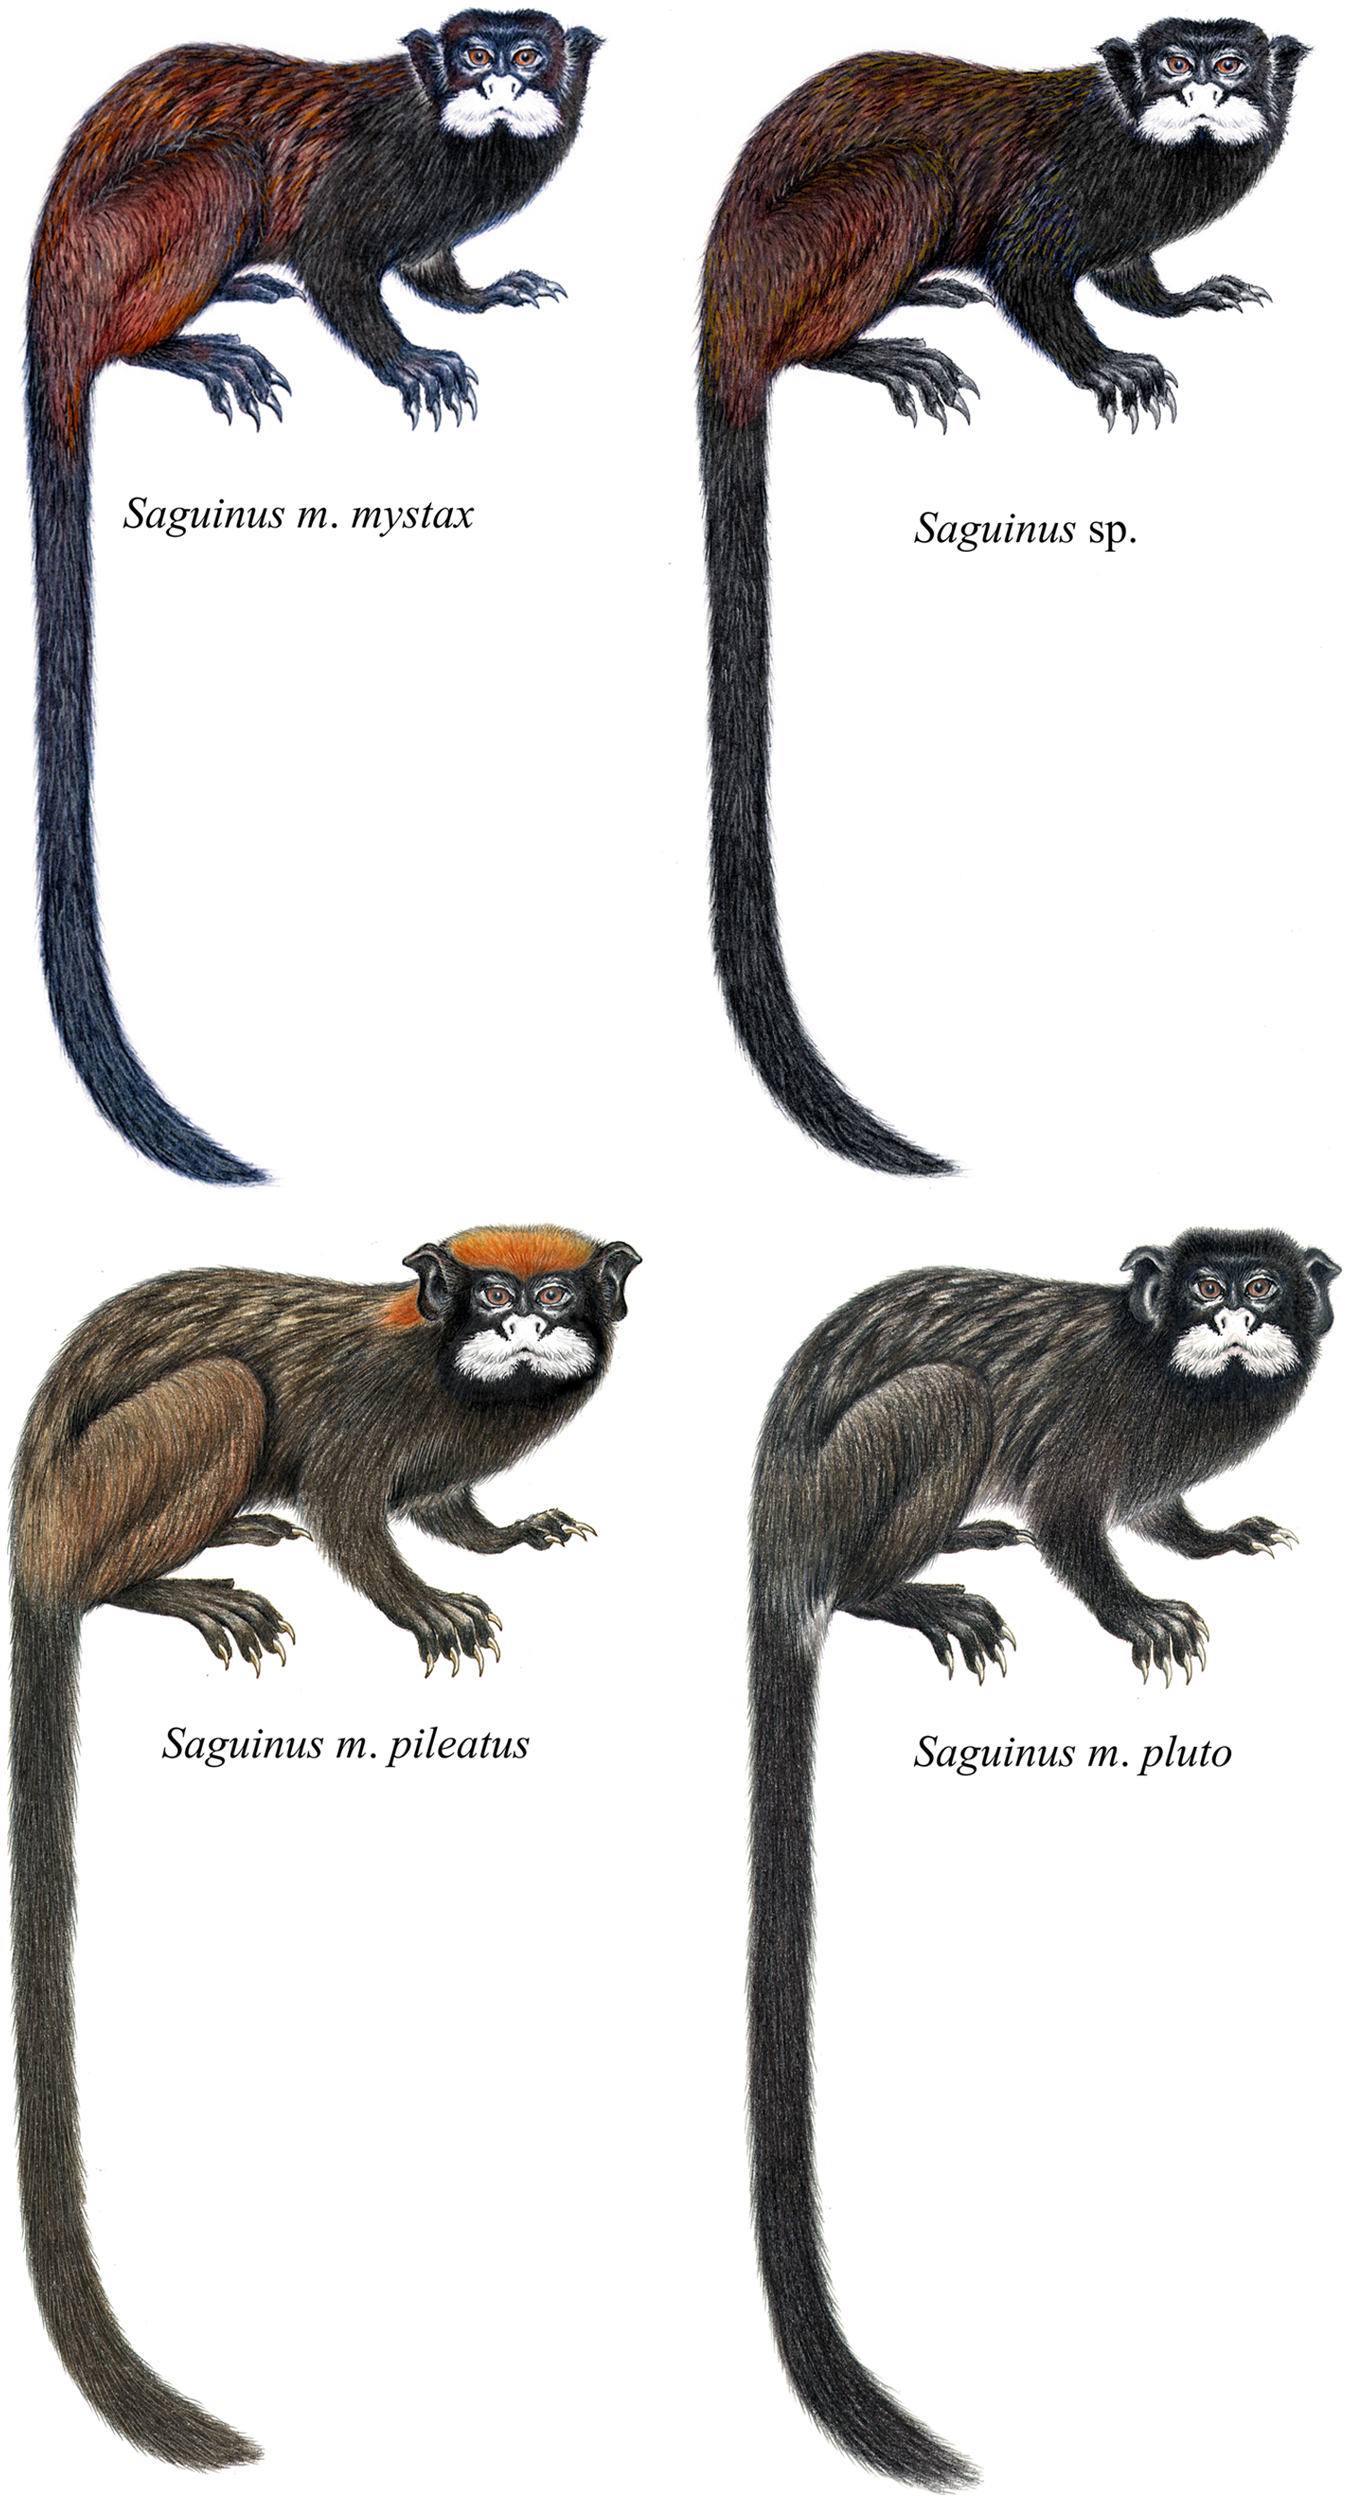 Taxonomic review of Saguinus mystax (Spix, 1823) (Primates